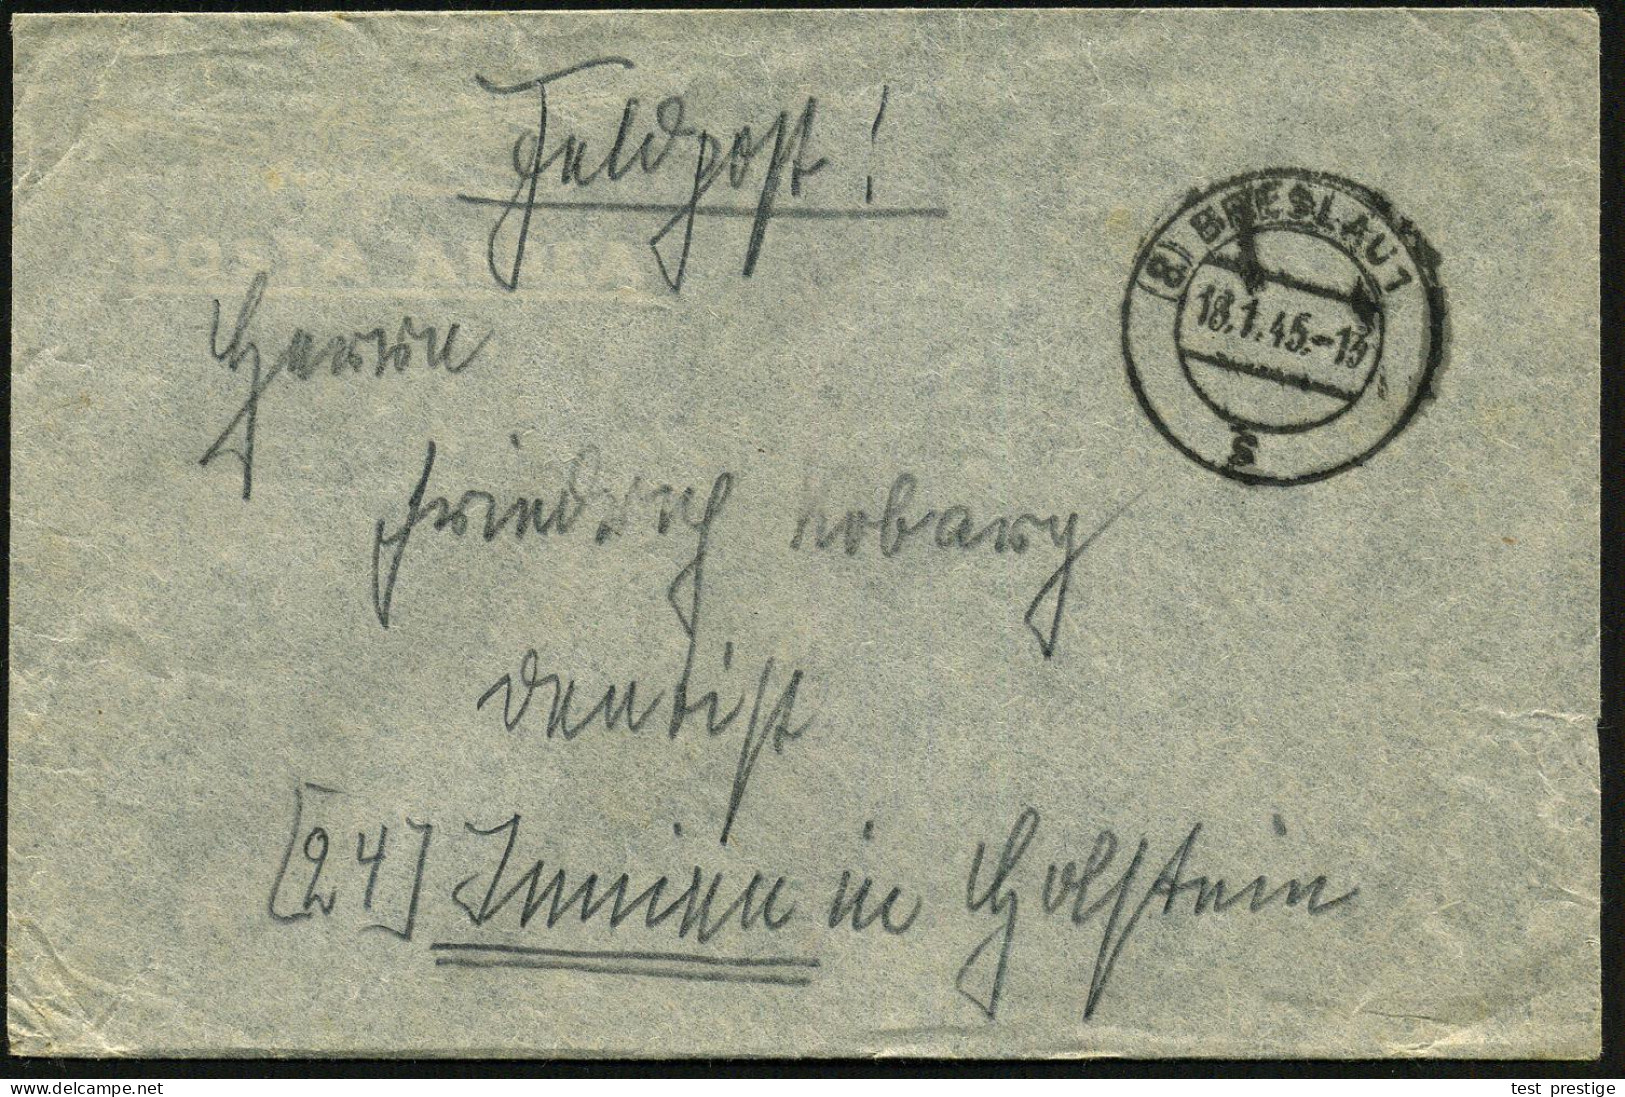 (8) BRESLAU 1/ S 1945 (18.1.) 2K-Steg Mit Postleitzahl ! + Rs. Hs. Fp.-Abs.: "..Leutnant.. Z. Zt. Breslau, Gren.(adier)  - WW2 (II Guerra Mundial)